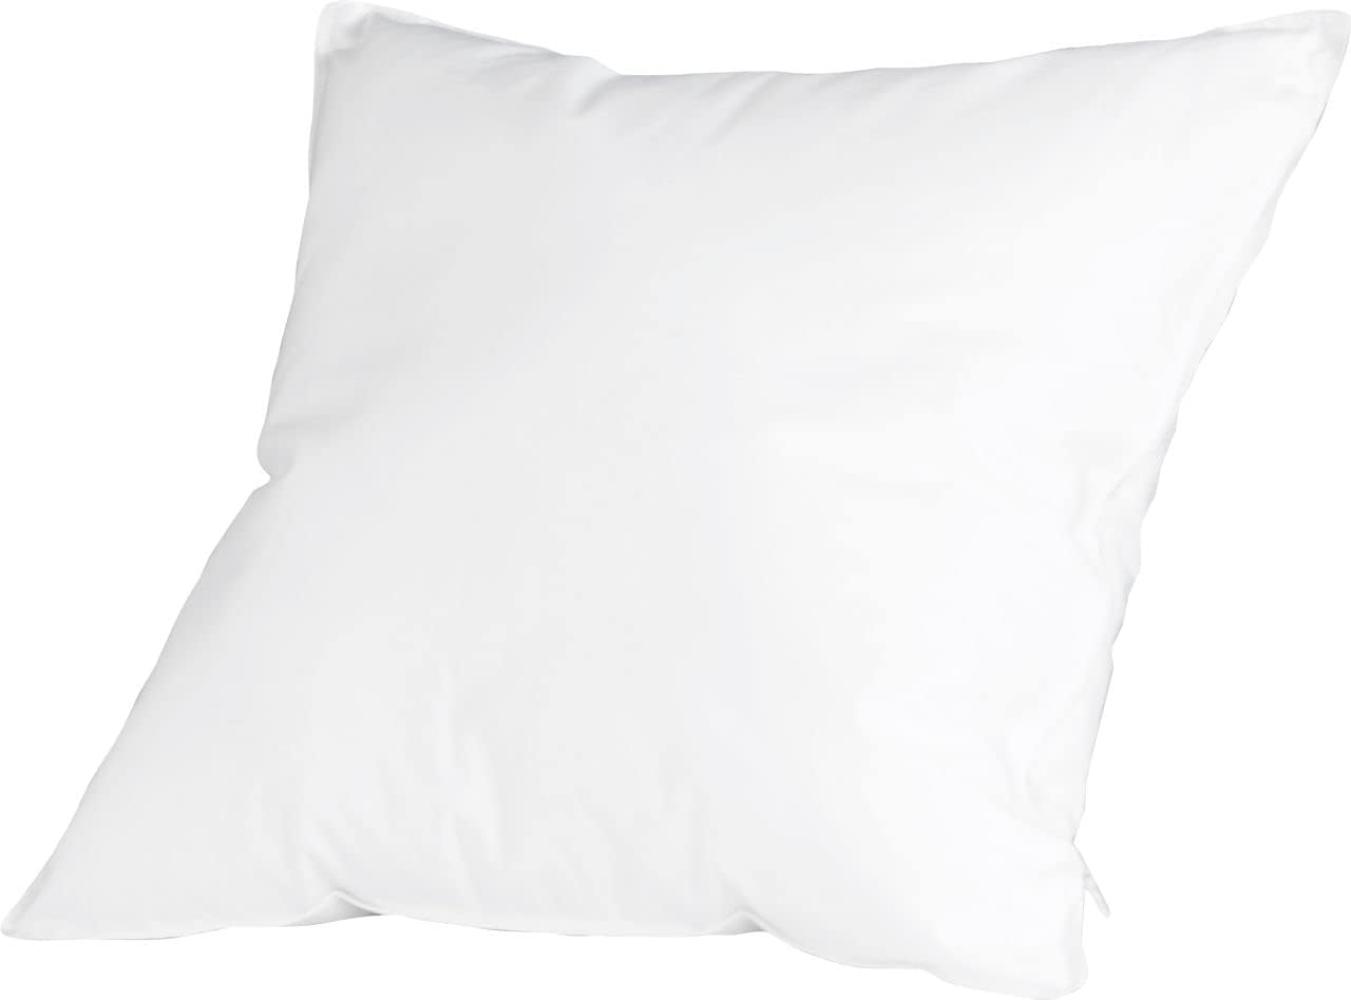 Badenia Trendline Kissen Comfort, weiß, 50 x 50 cm Bild 1